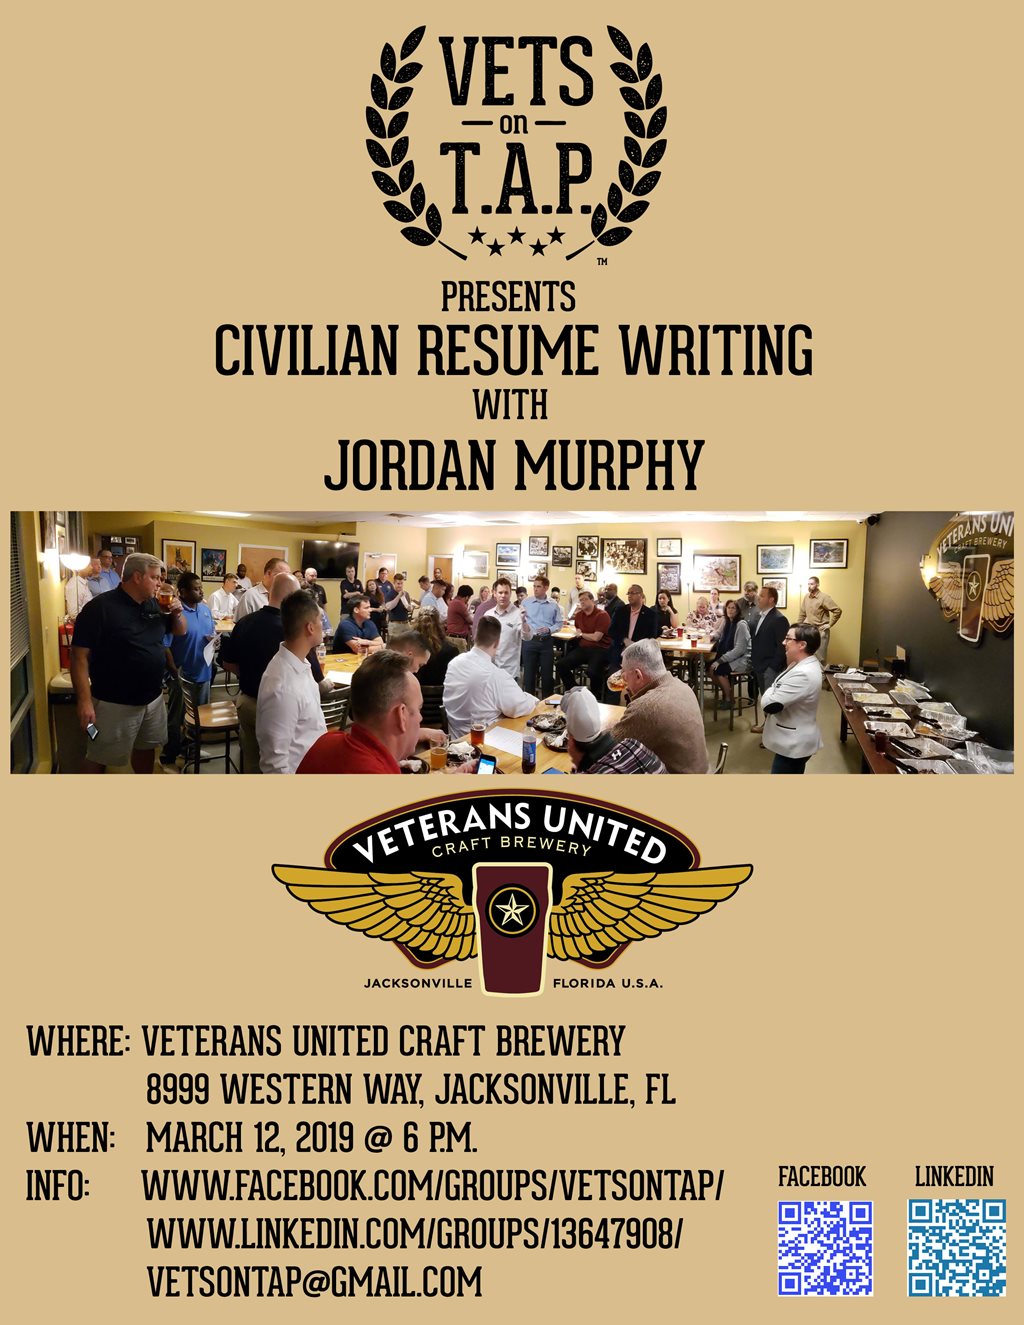 Vets on TAP presents Civilian Resume Writing with Jordan Murphy.